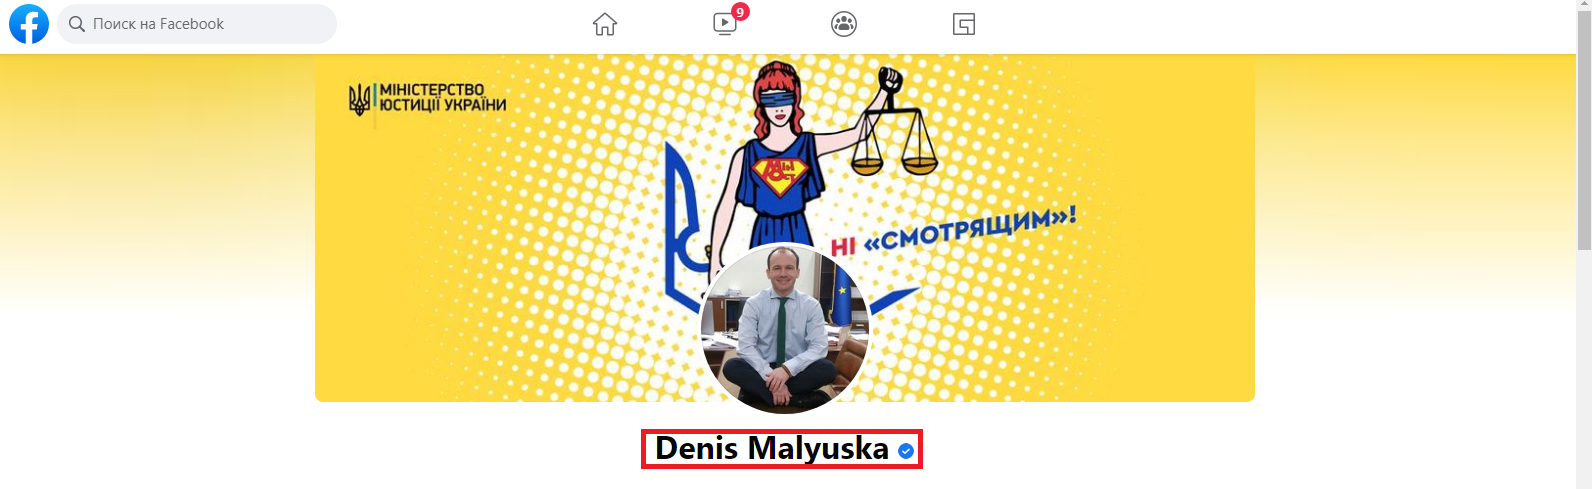 https://www.facebook.com/people/Denis-Malyuska/100011121947008